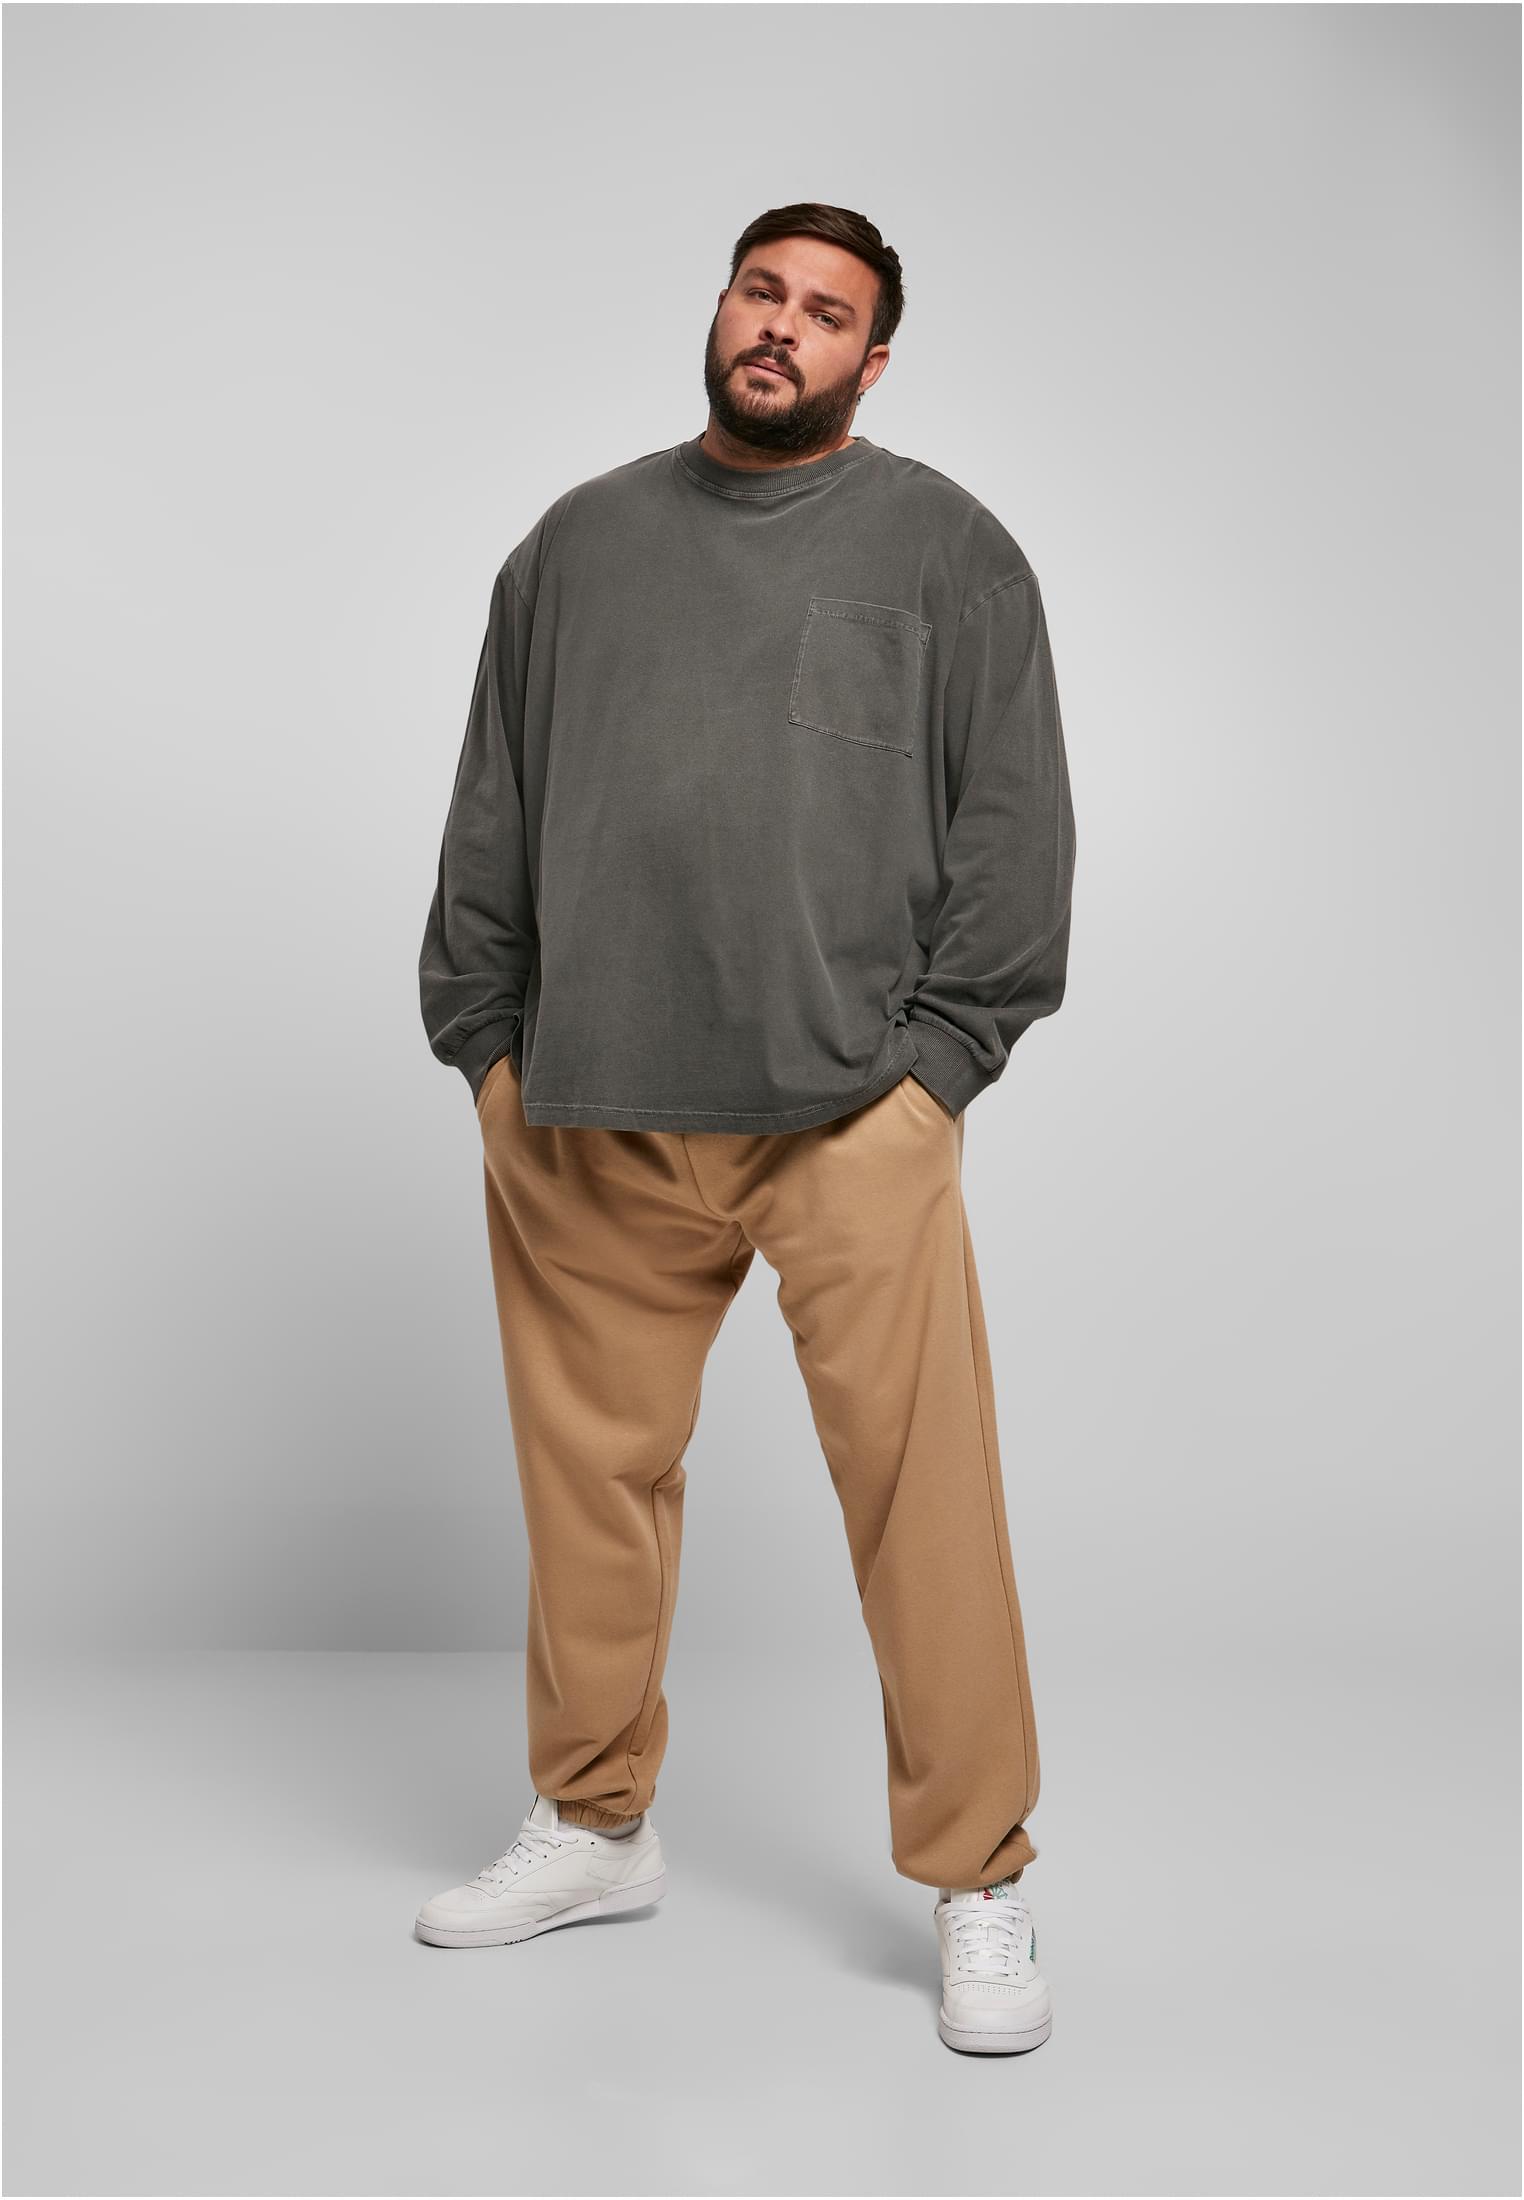 Urban Classics Plus Size Basic Sweatpants 2.0 (Farbe: warm sand / Größe: 4XL)